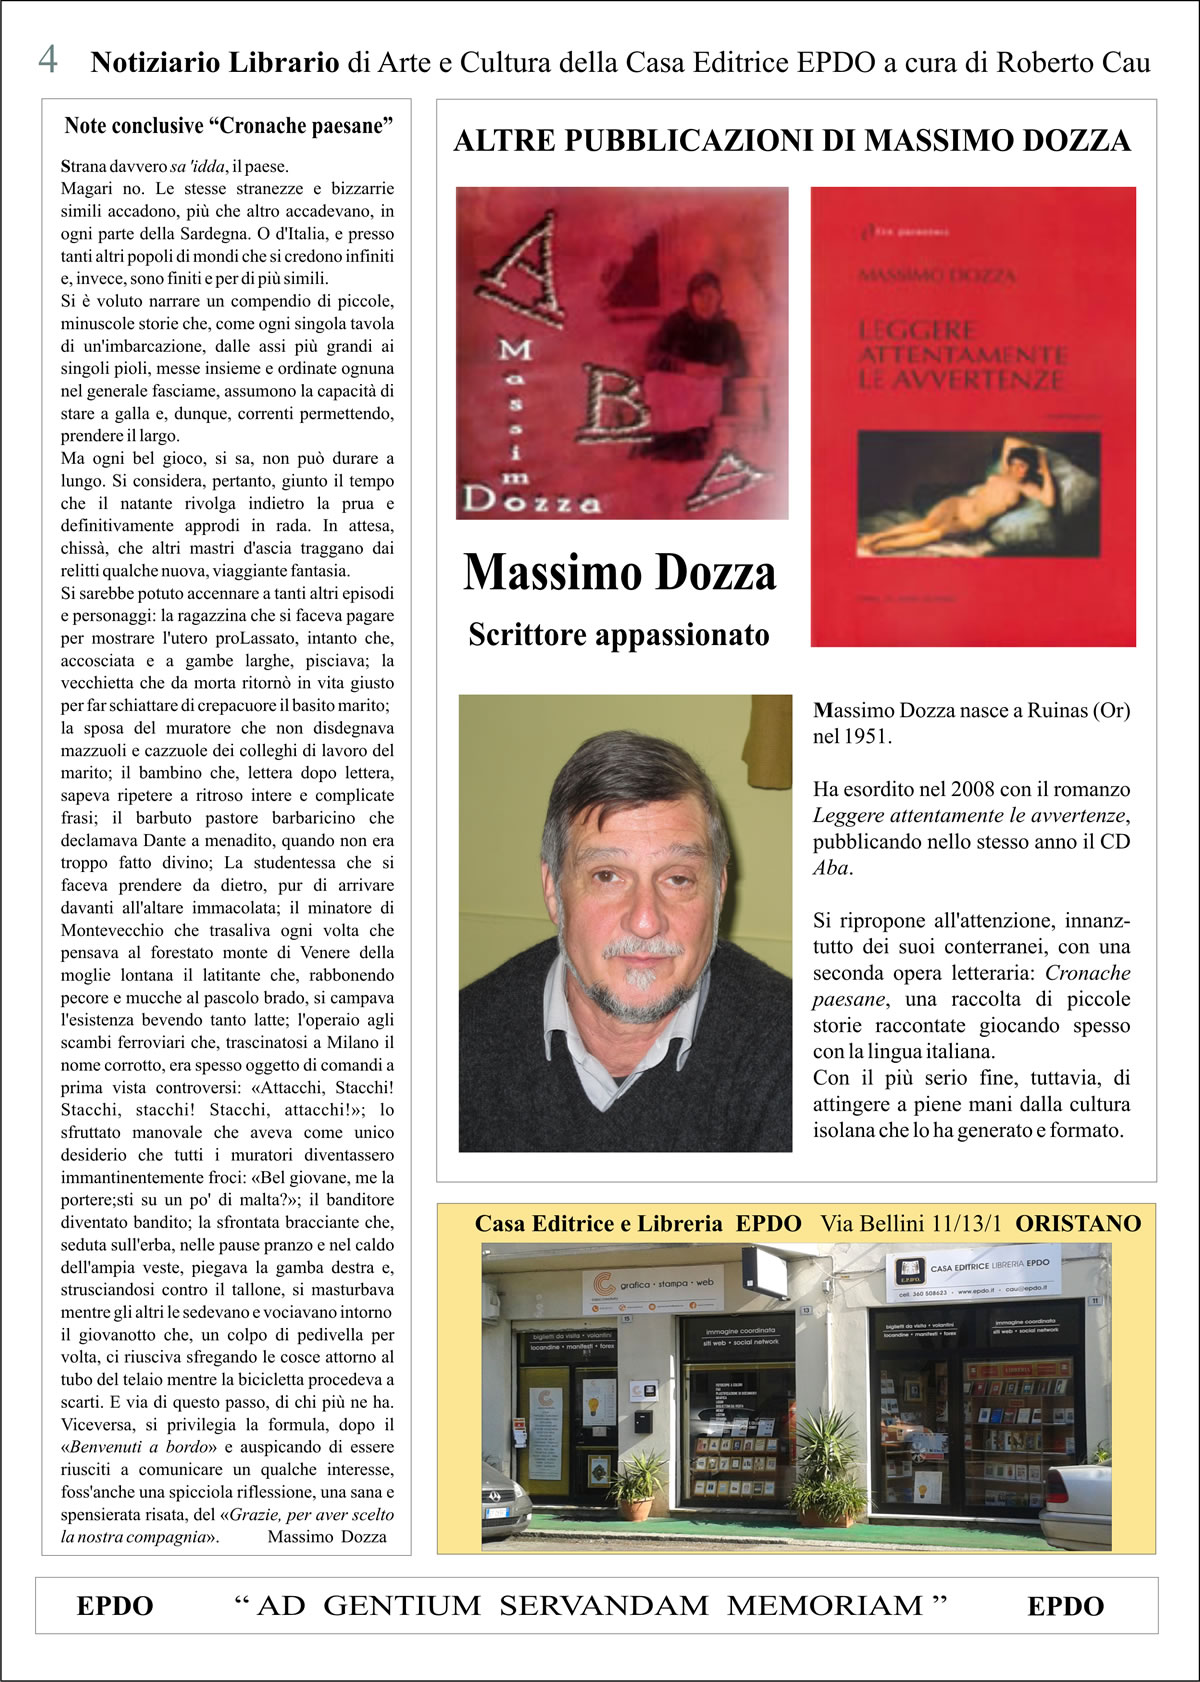 Notiziario Librairio EPDO - Massimo Dozza